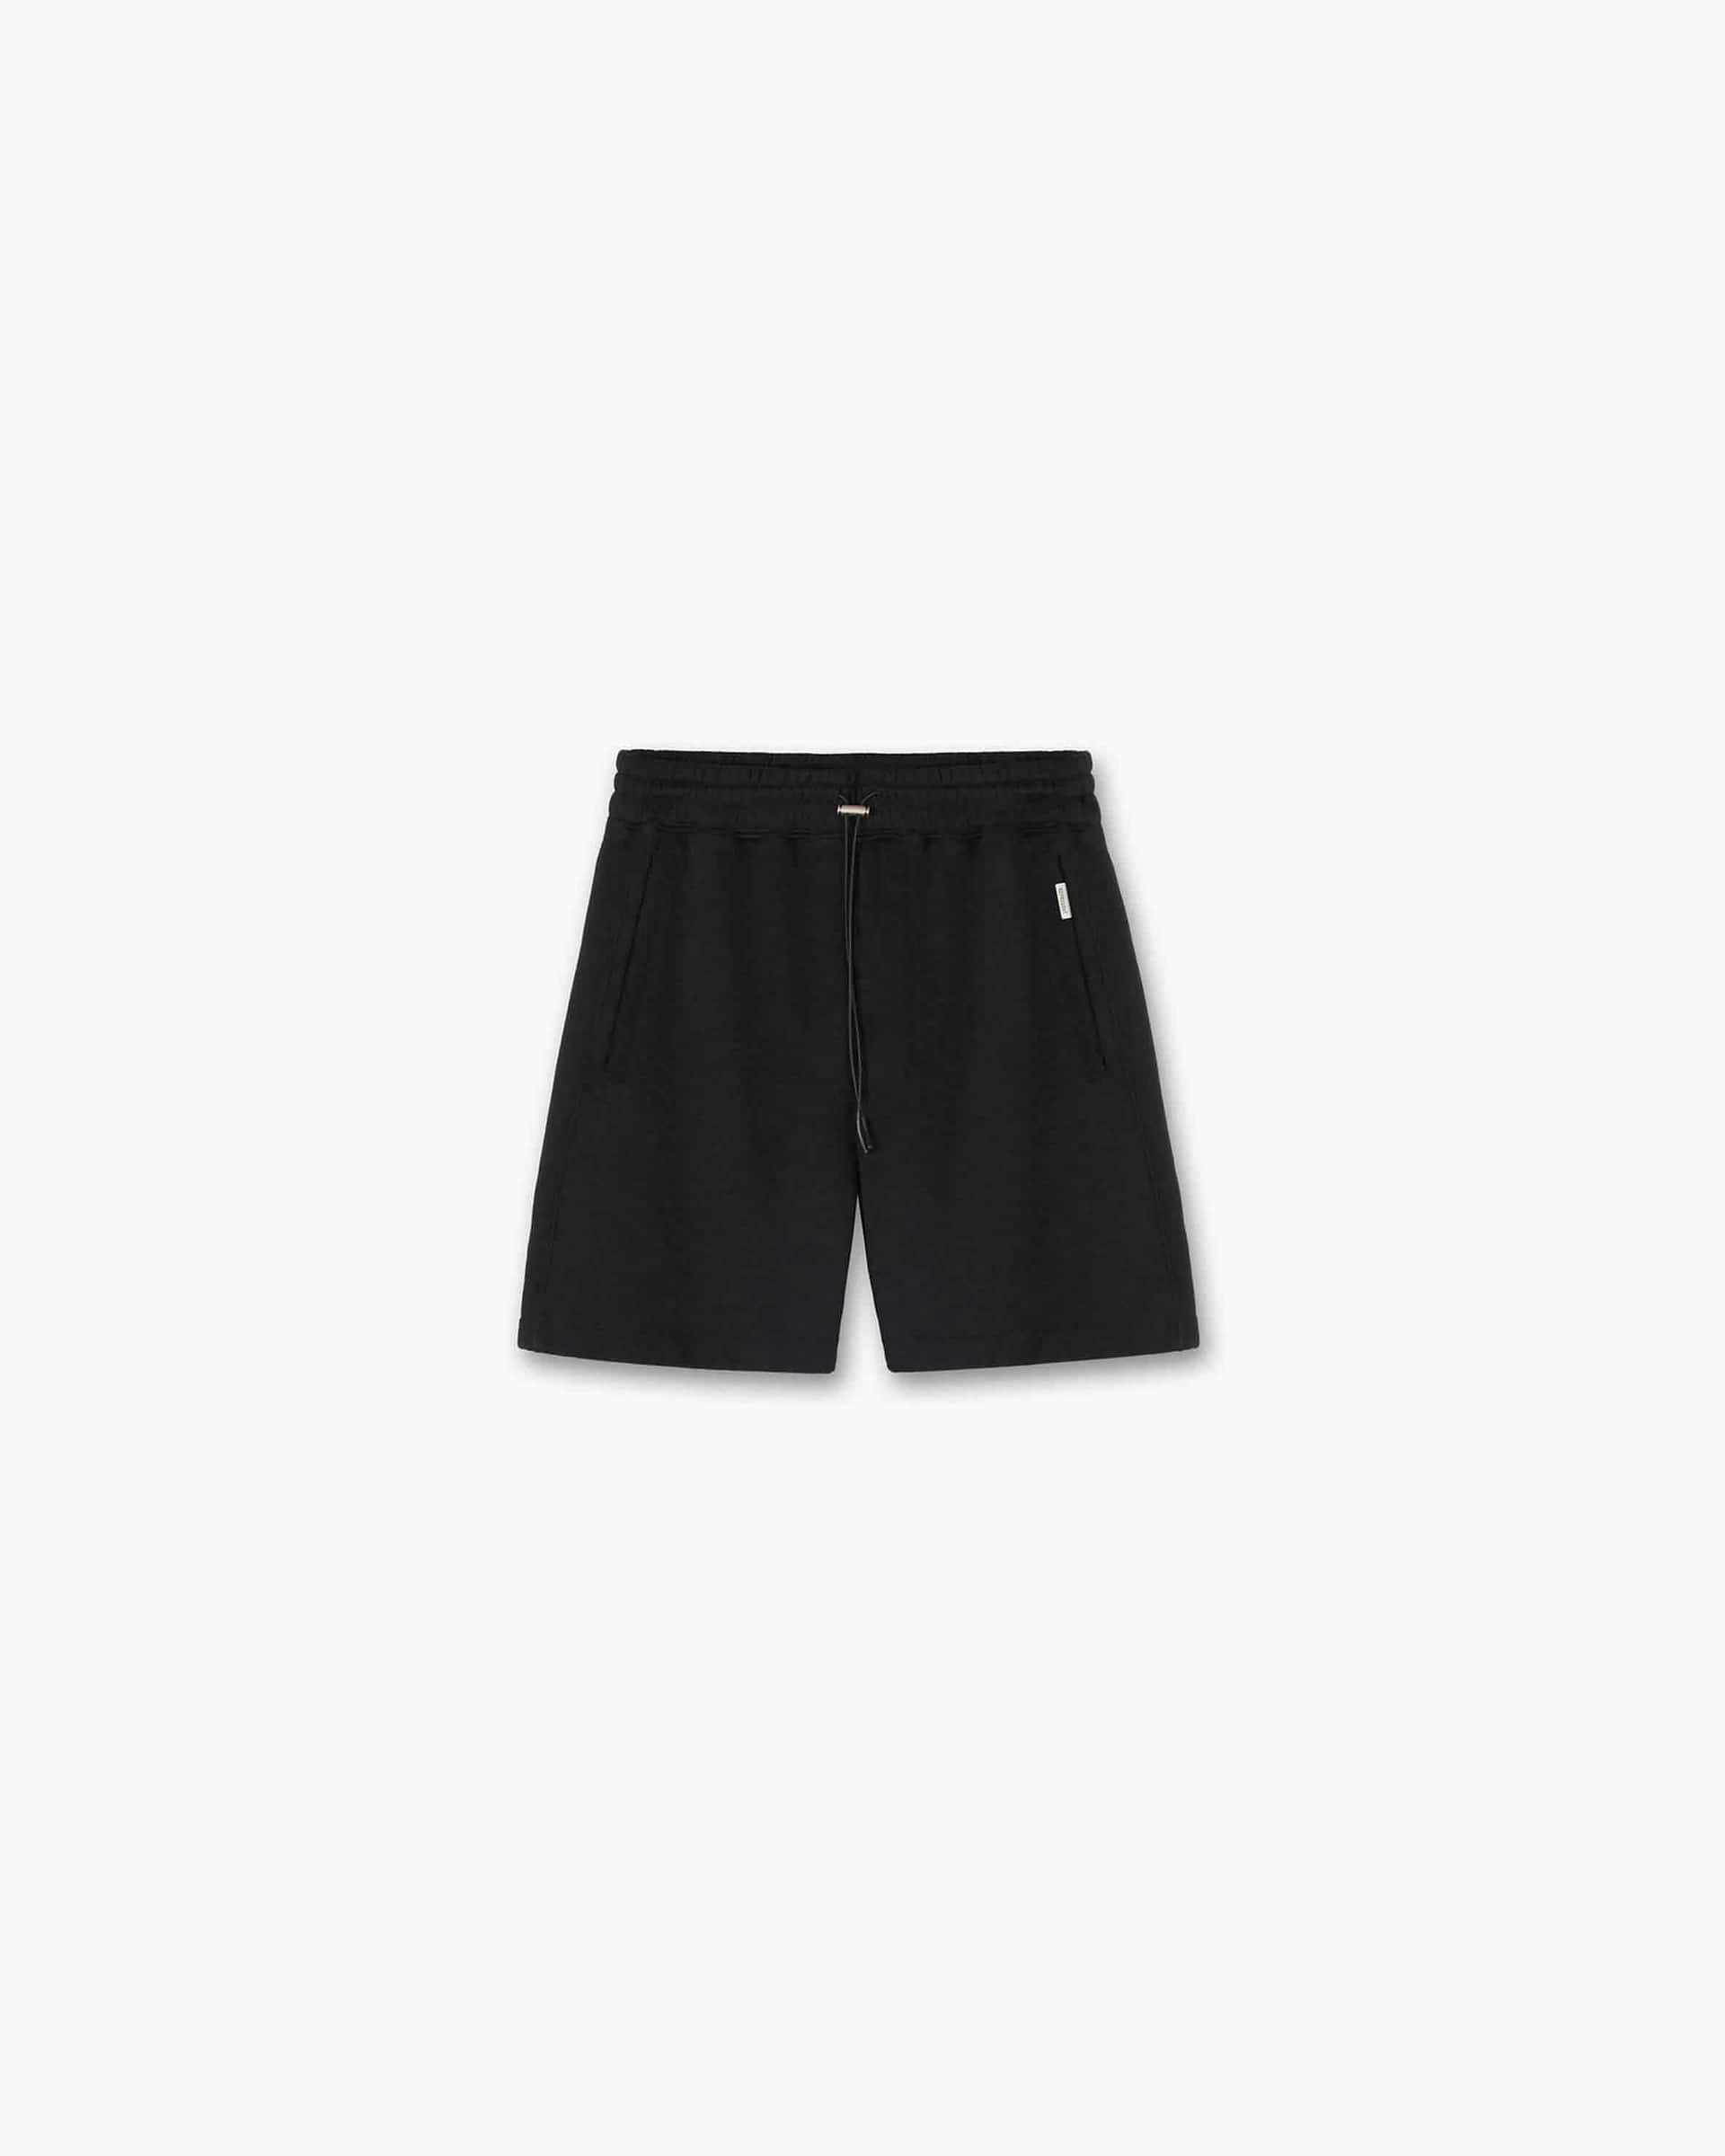 Blank Shorts | Jet Black Shorts BLANKS | Represent Clo